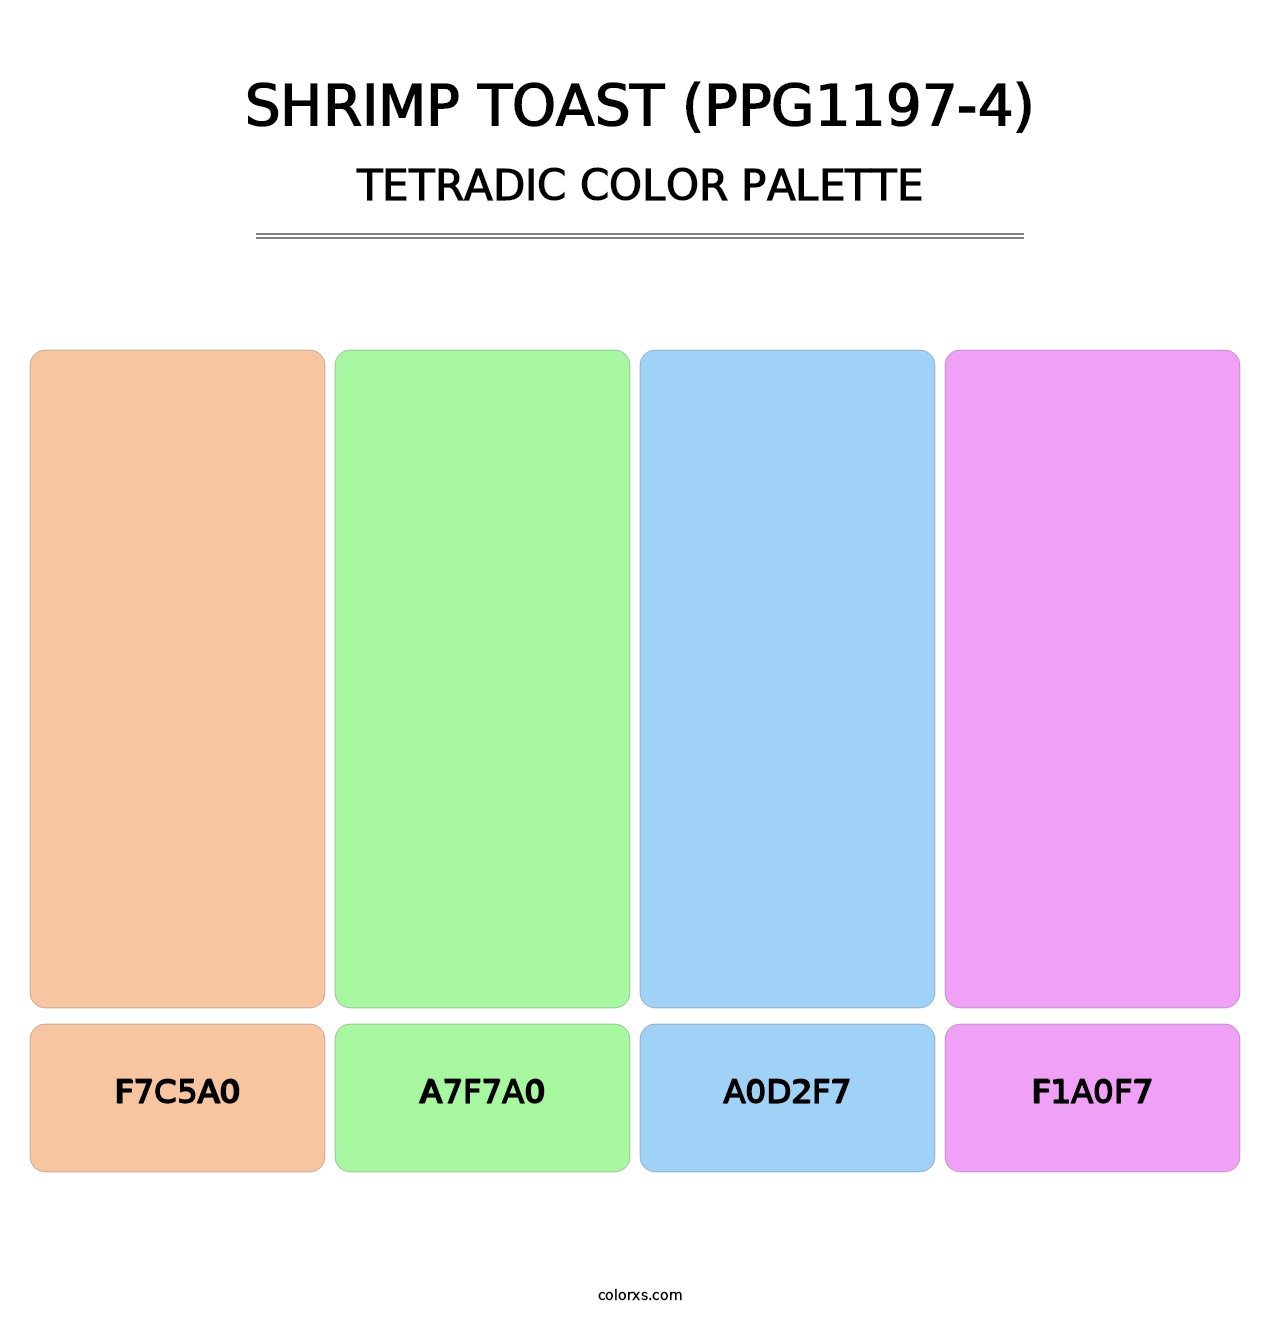 Shrimp Toast (PPG1197-4) - Tetradic Color Palette